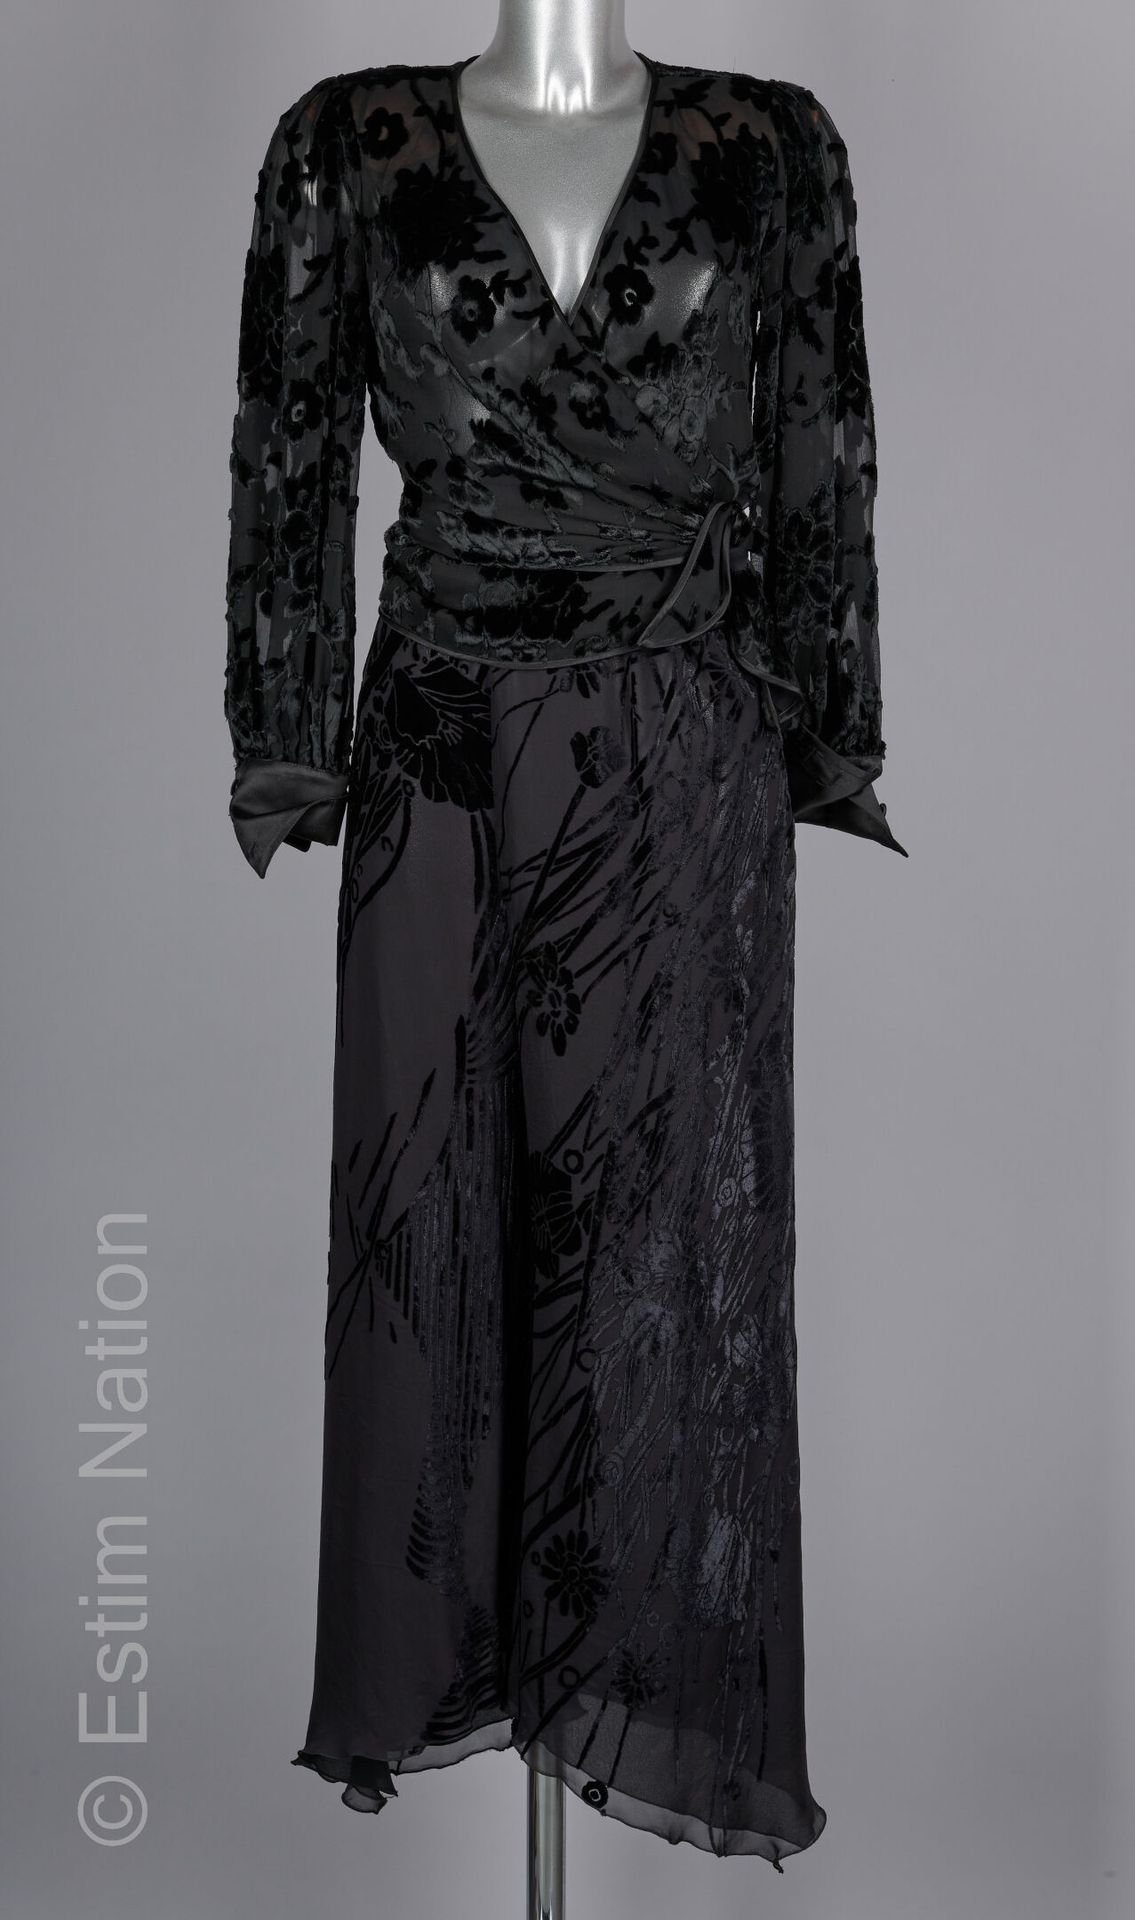 EMMANUEL UNGARO, UNGARO PARALLELES PANTALON in silk and black velvet panne with &hellip;